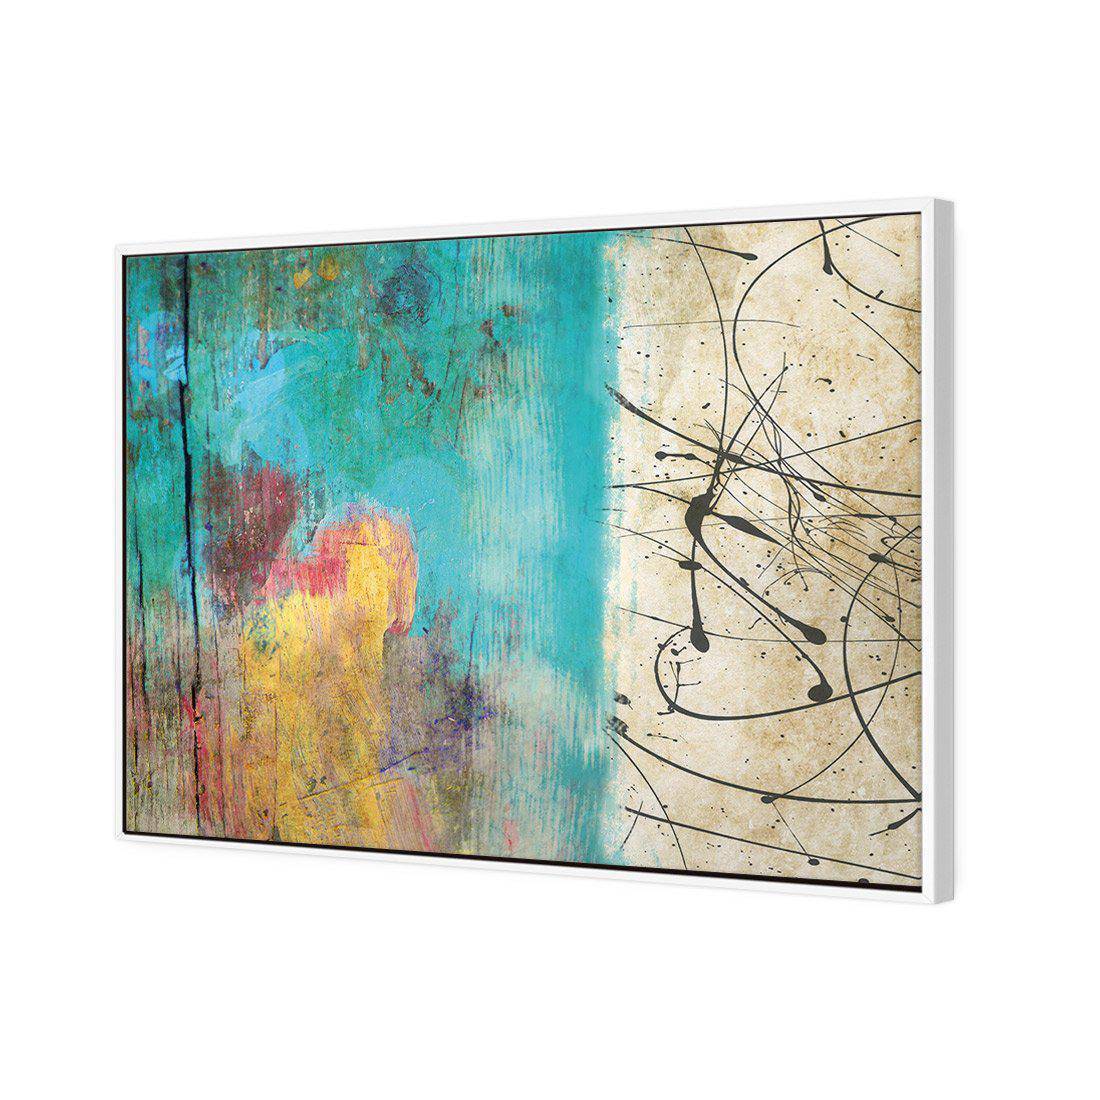 Painted Grunge Splatter Canvas Art-Canvas-Wall Art Designs-45x30cm-Canvas - White Frame-Wall Art Designs